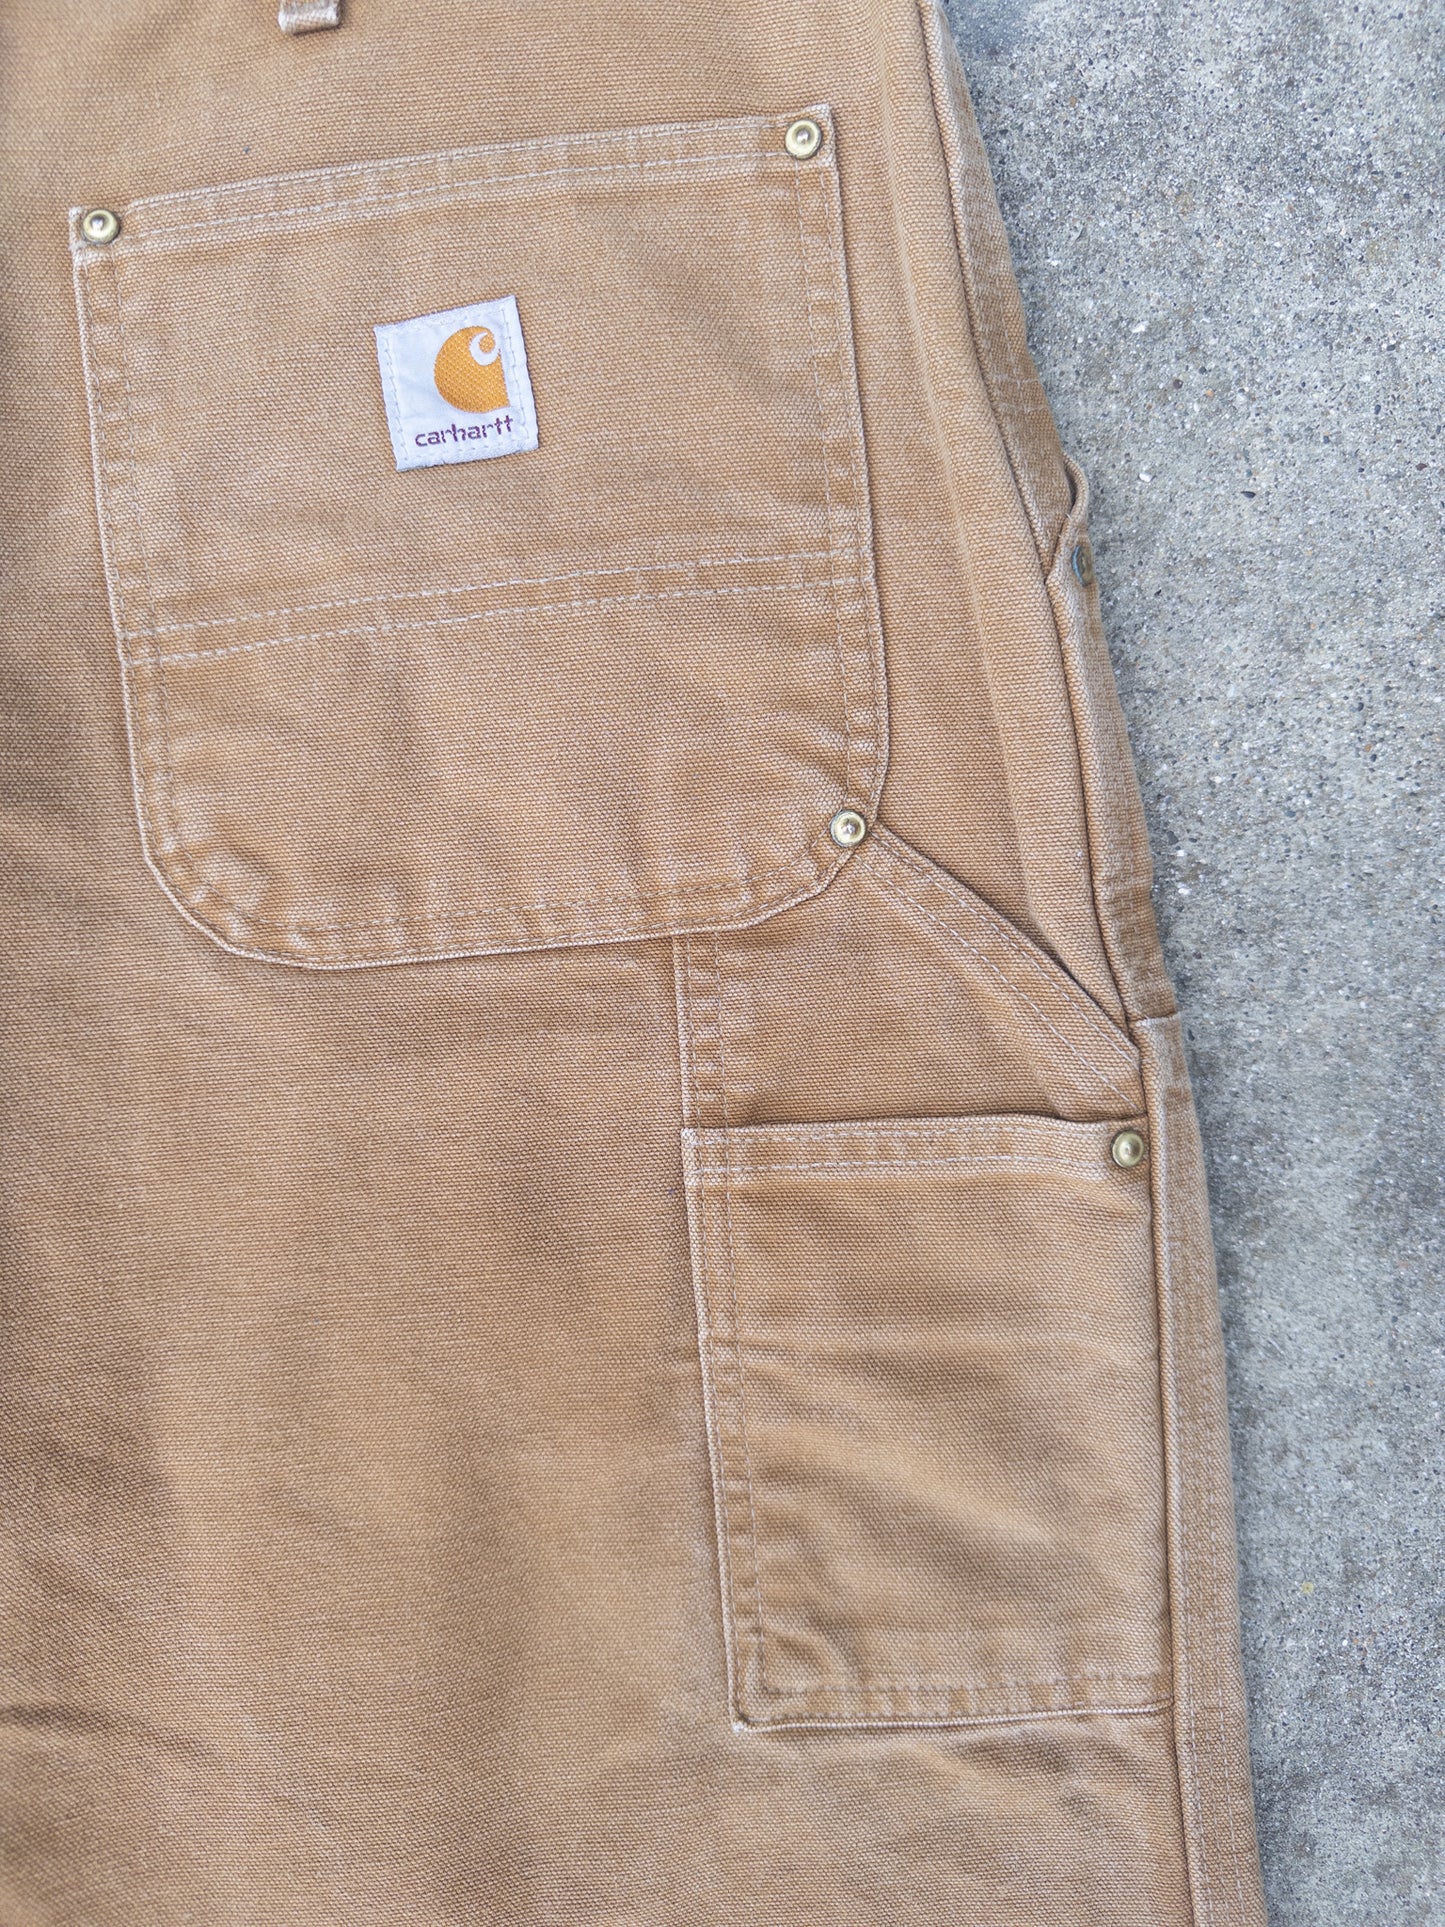 Vintage Carhartt Double Knee Carpenter Pants